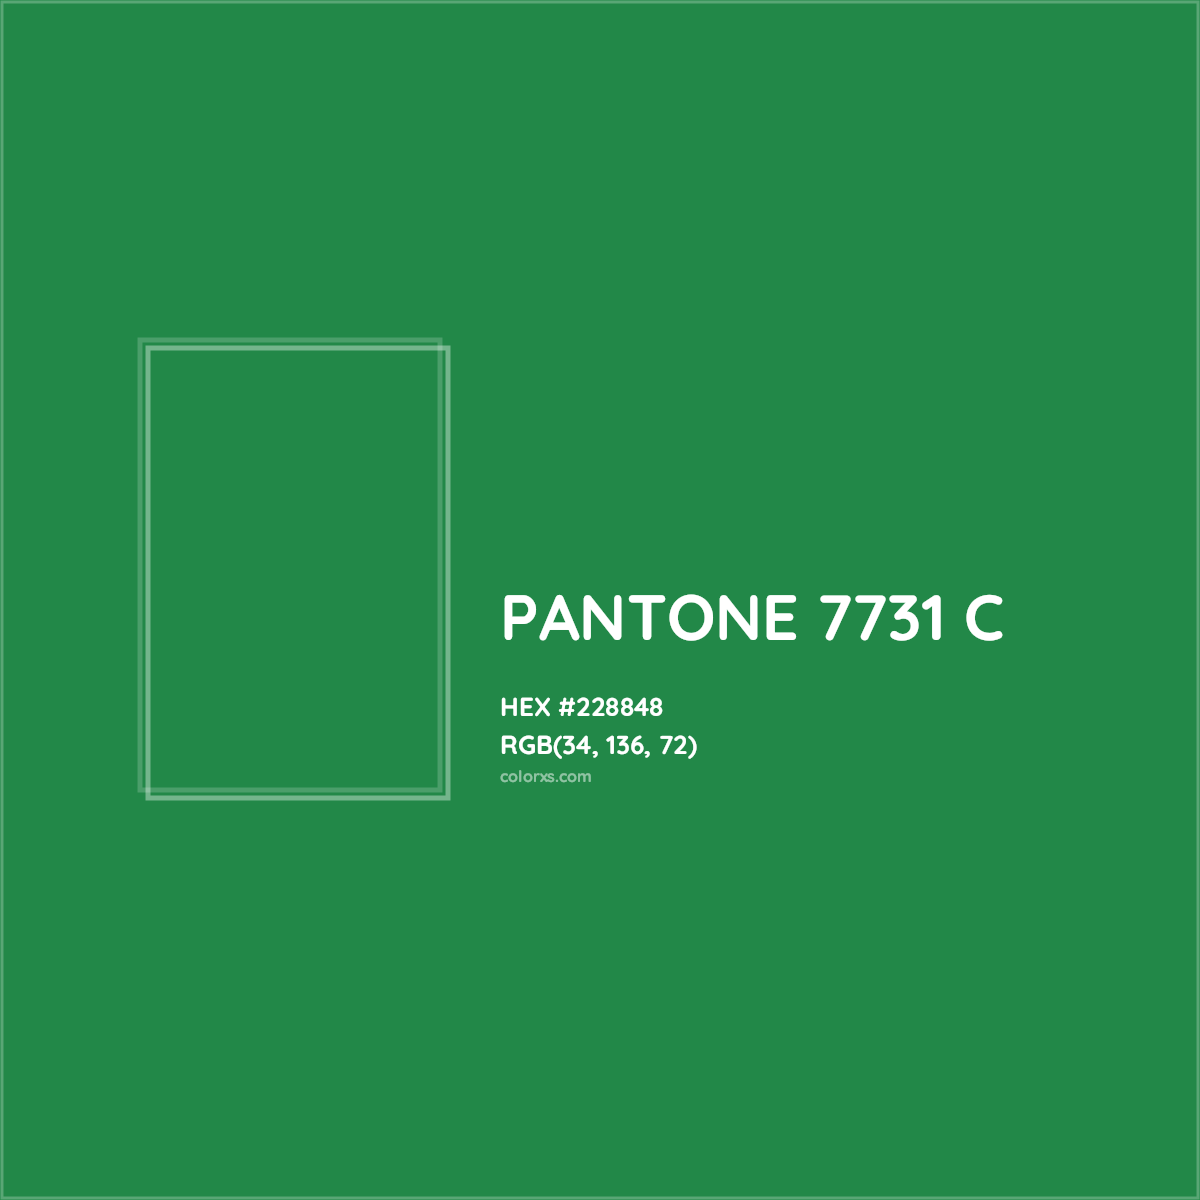 HEX #228848 PANTONE 7731 C CMS Pantone PMS - Color Code